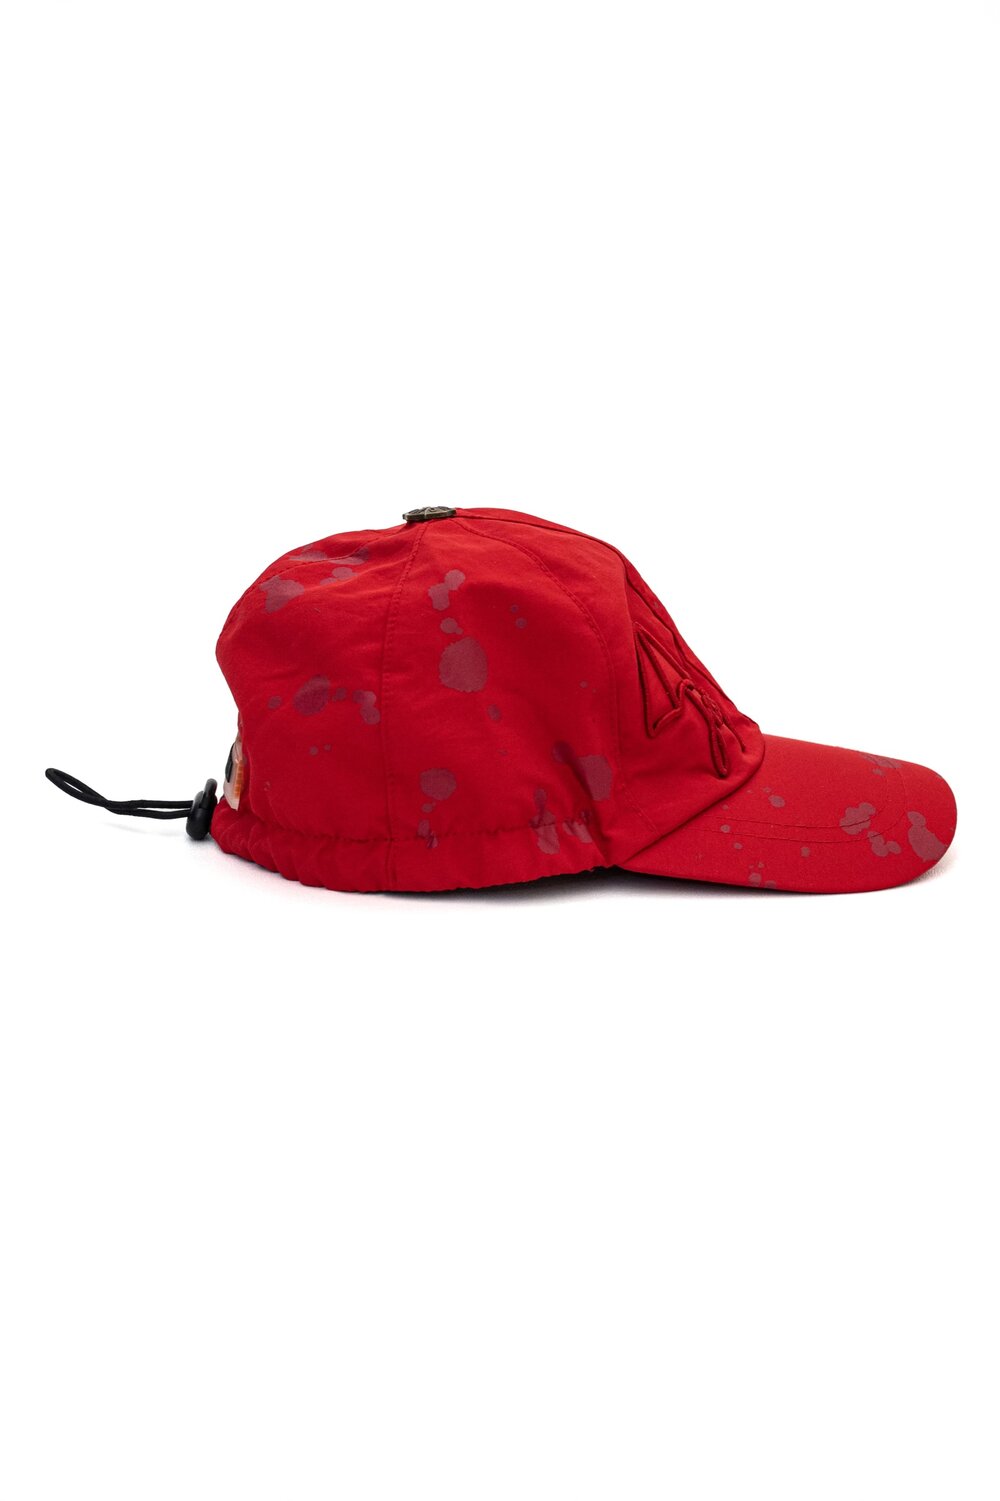 Logo (Red) Repellent JOOGS Water — Baseball Cap Joogs